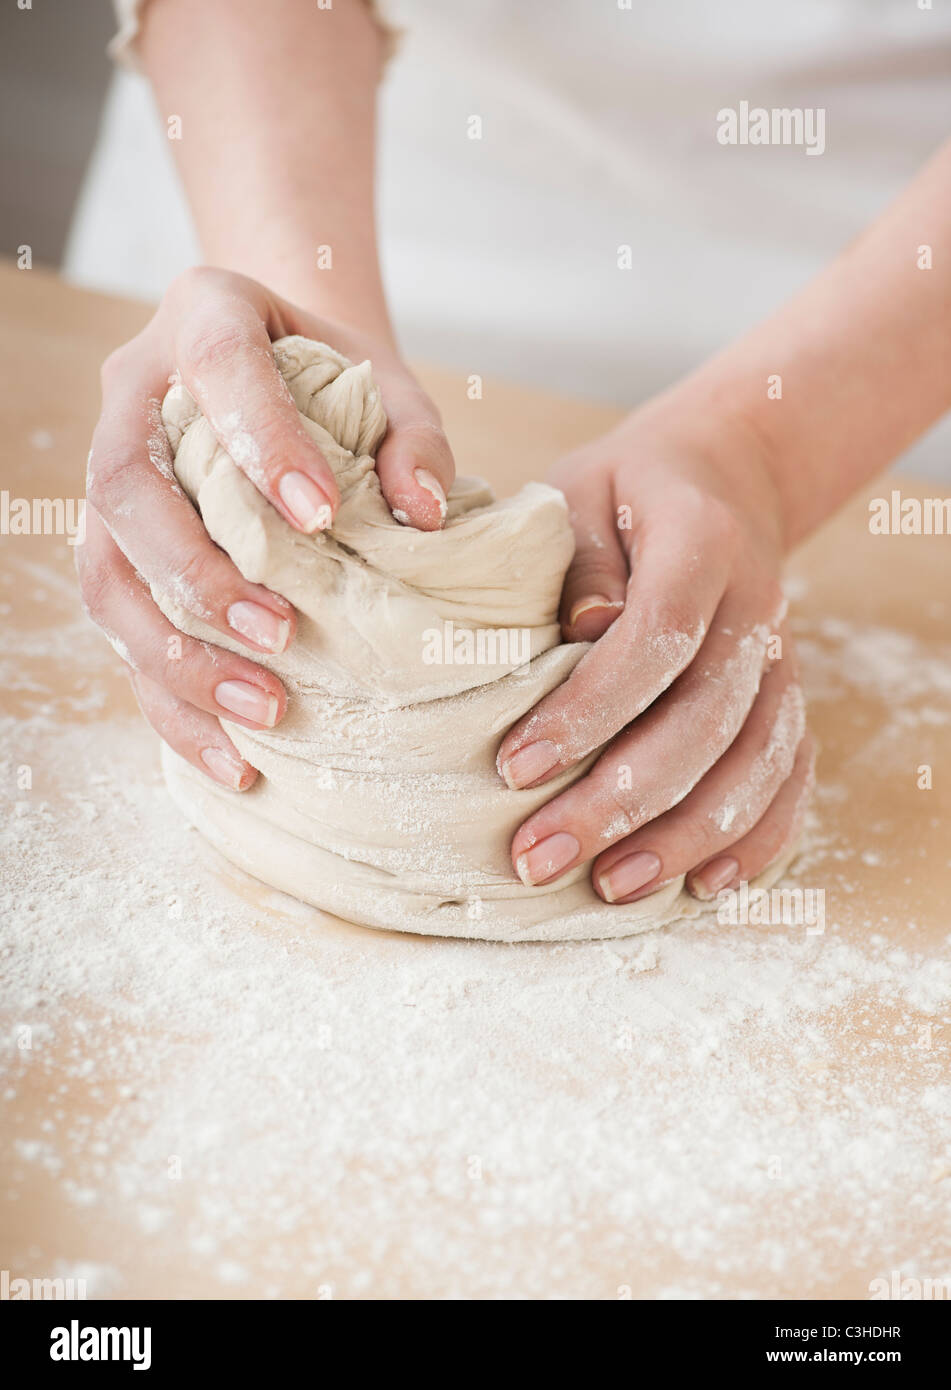 Woman preparing dough Stock Photo